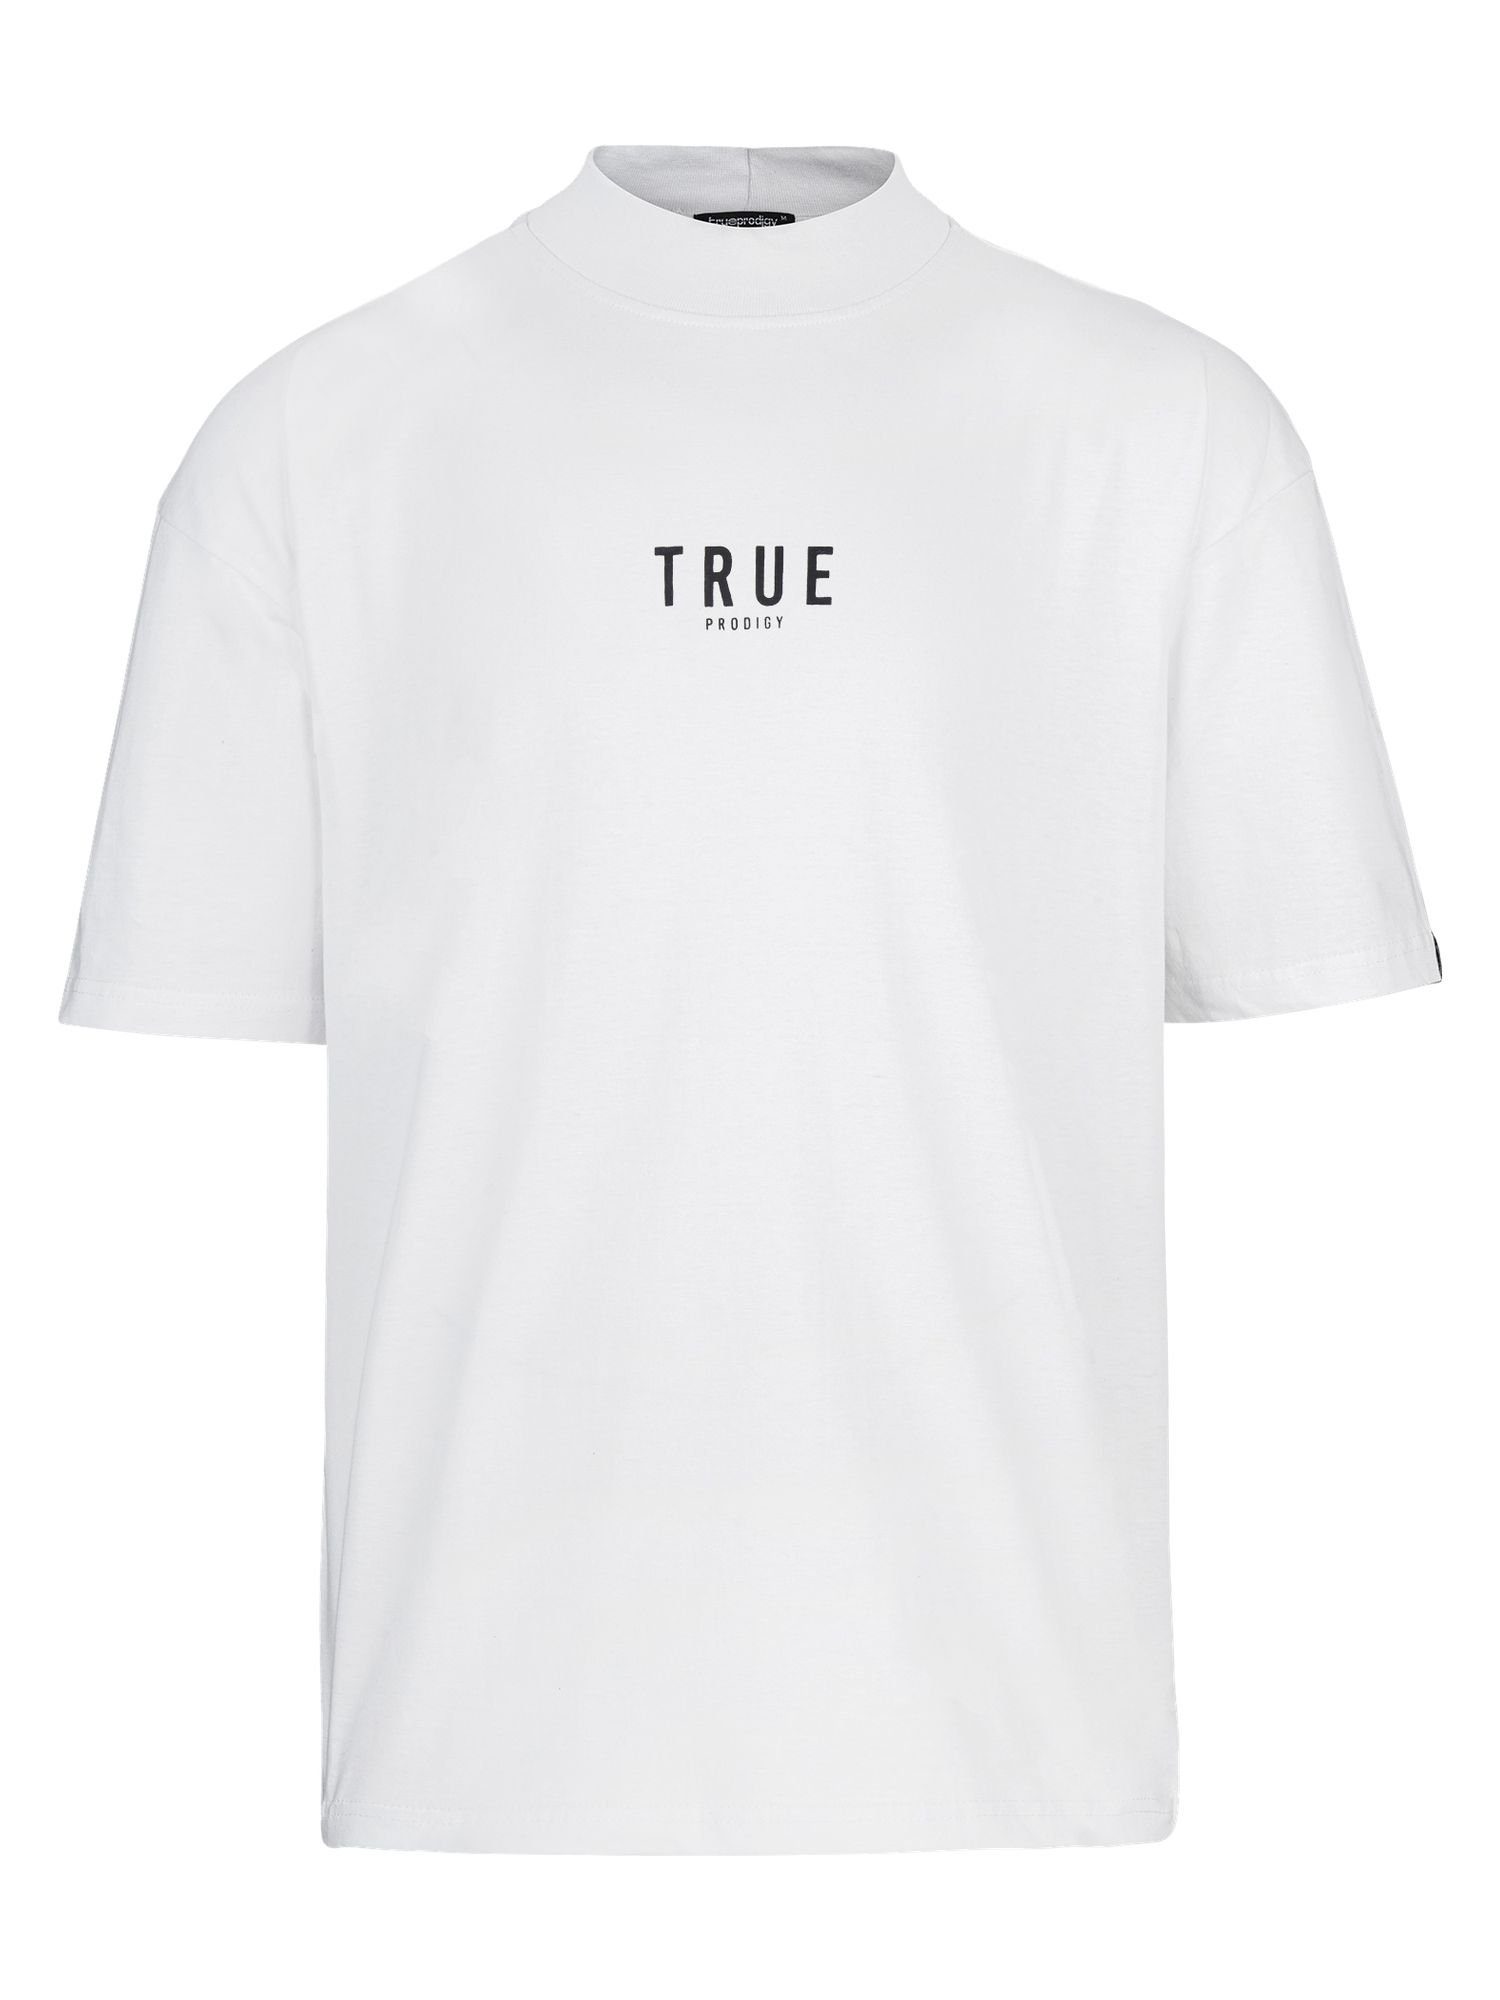 Stehkragen Weiß Oversize-Shirt dicker Logoprint trueprodigy Riley Stoff